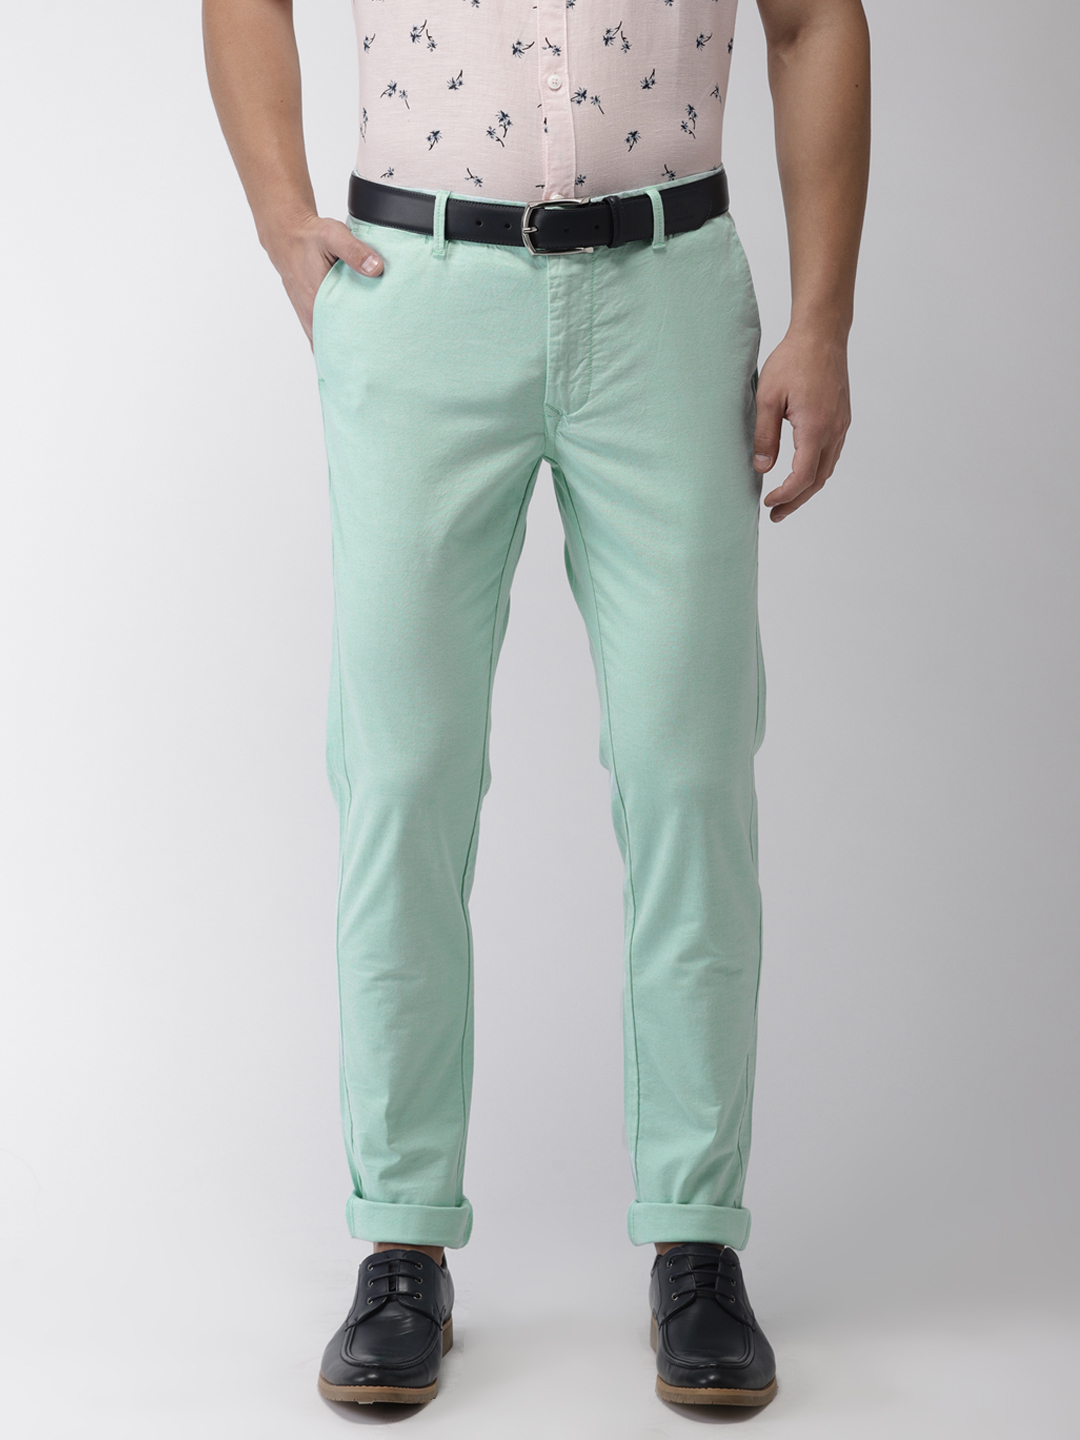 Zuba Solid Sea Green Pants – Cherrypick